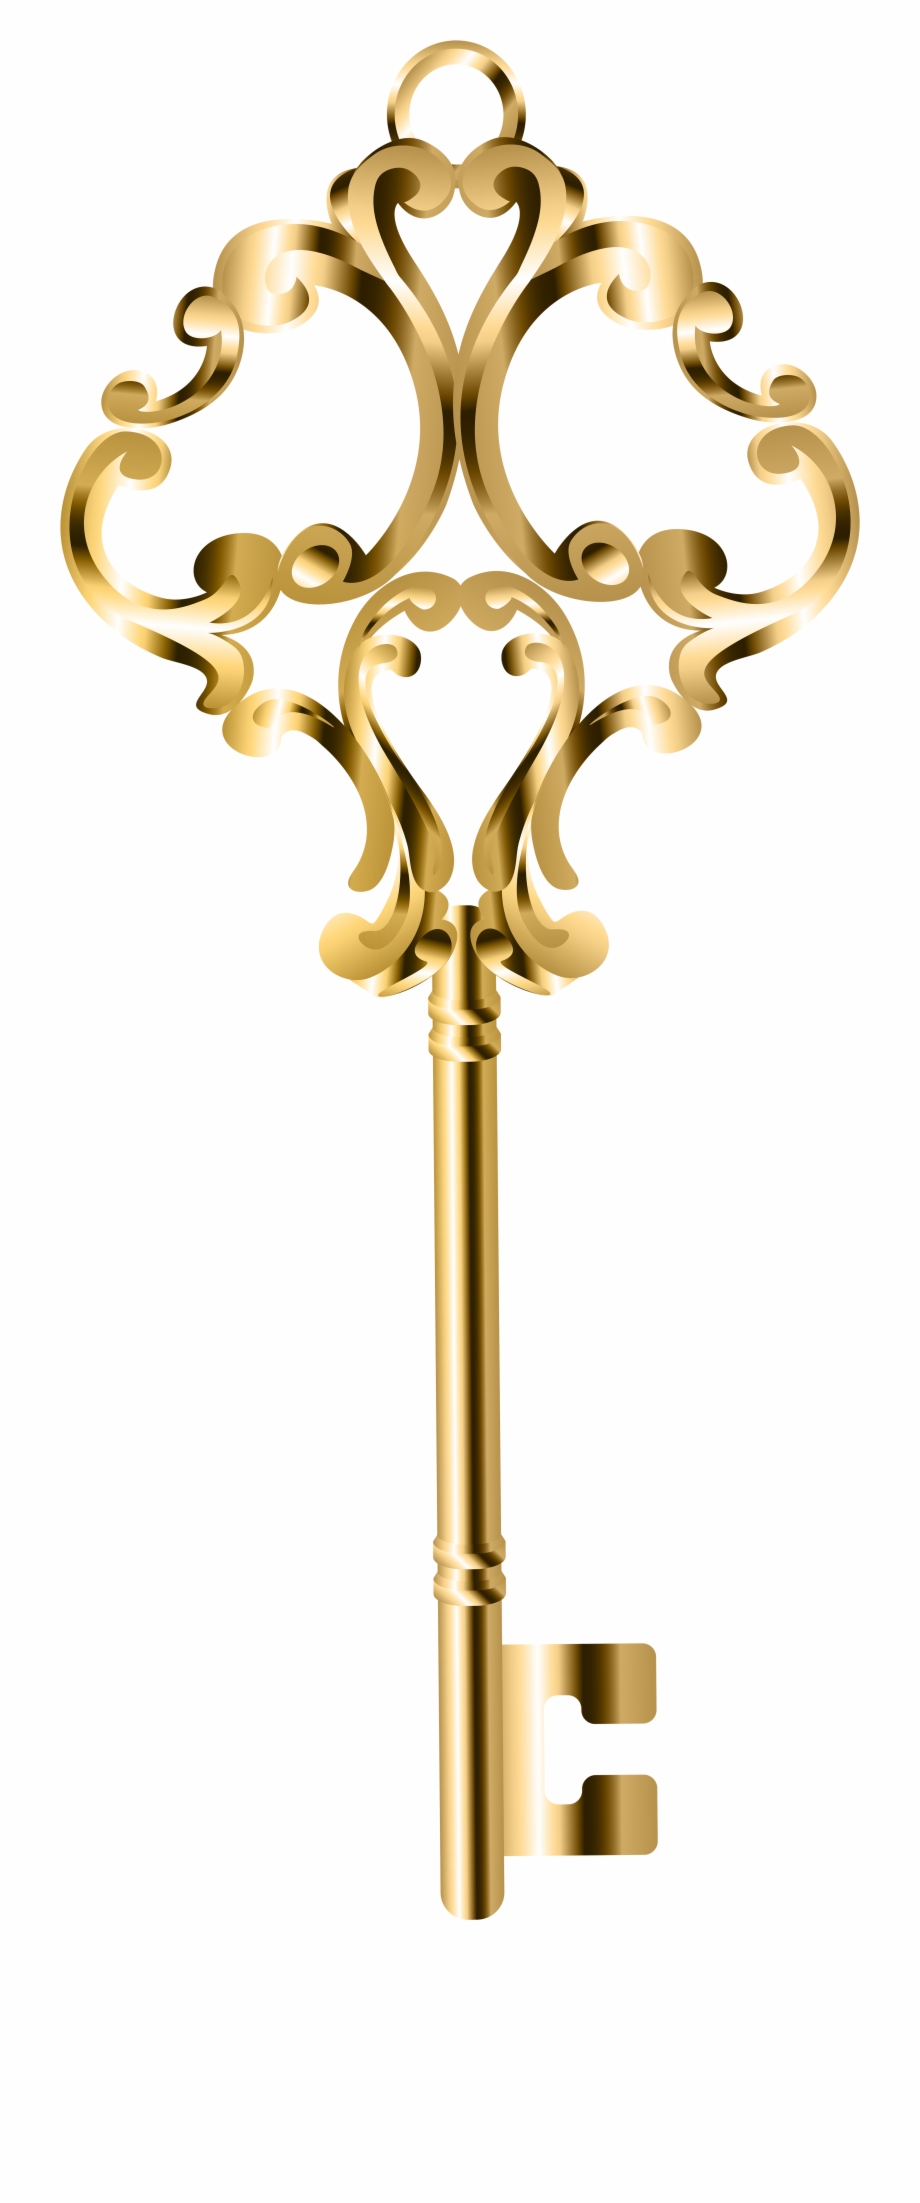 golden key clip art
